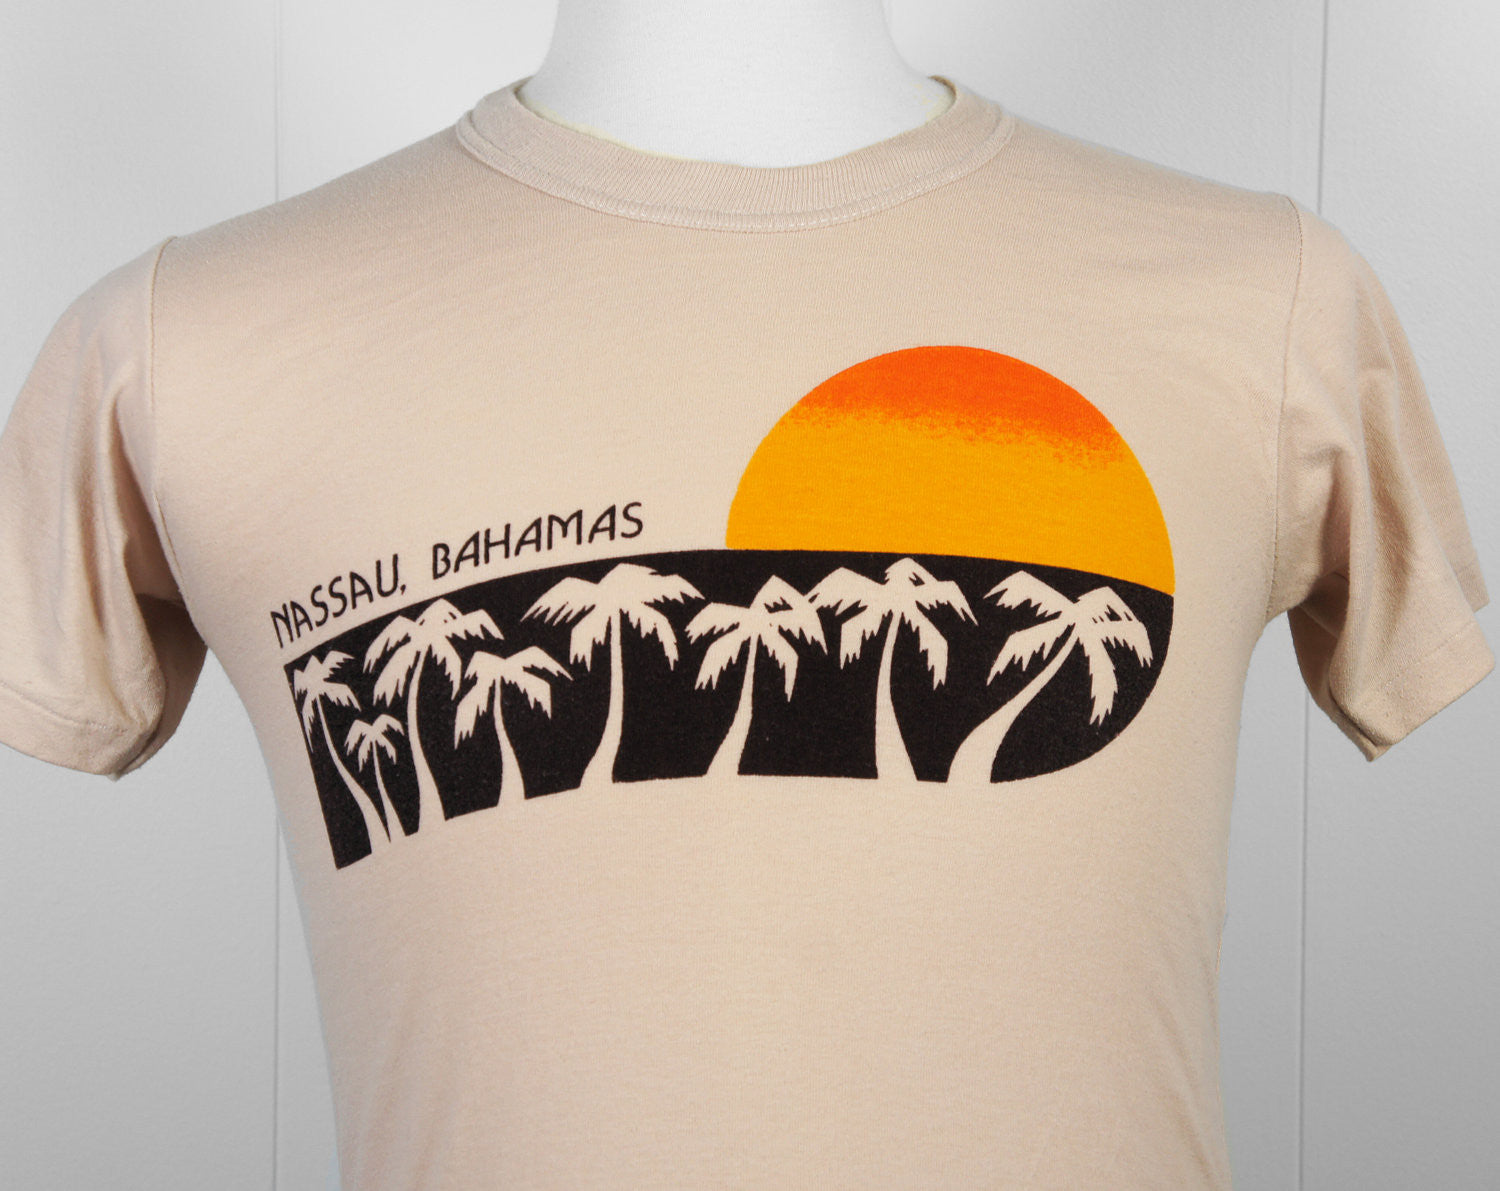 1970's Nassau, Bahamas T-Shirt - Size S